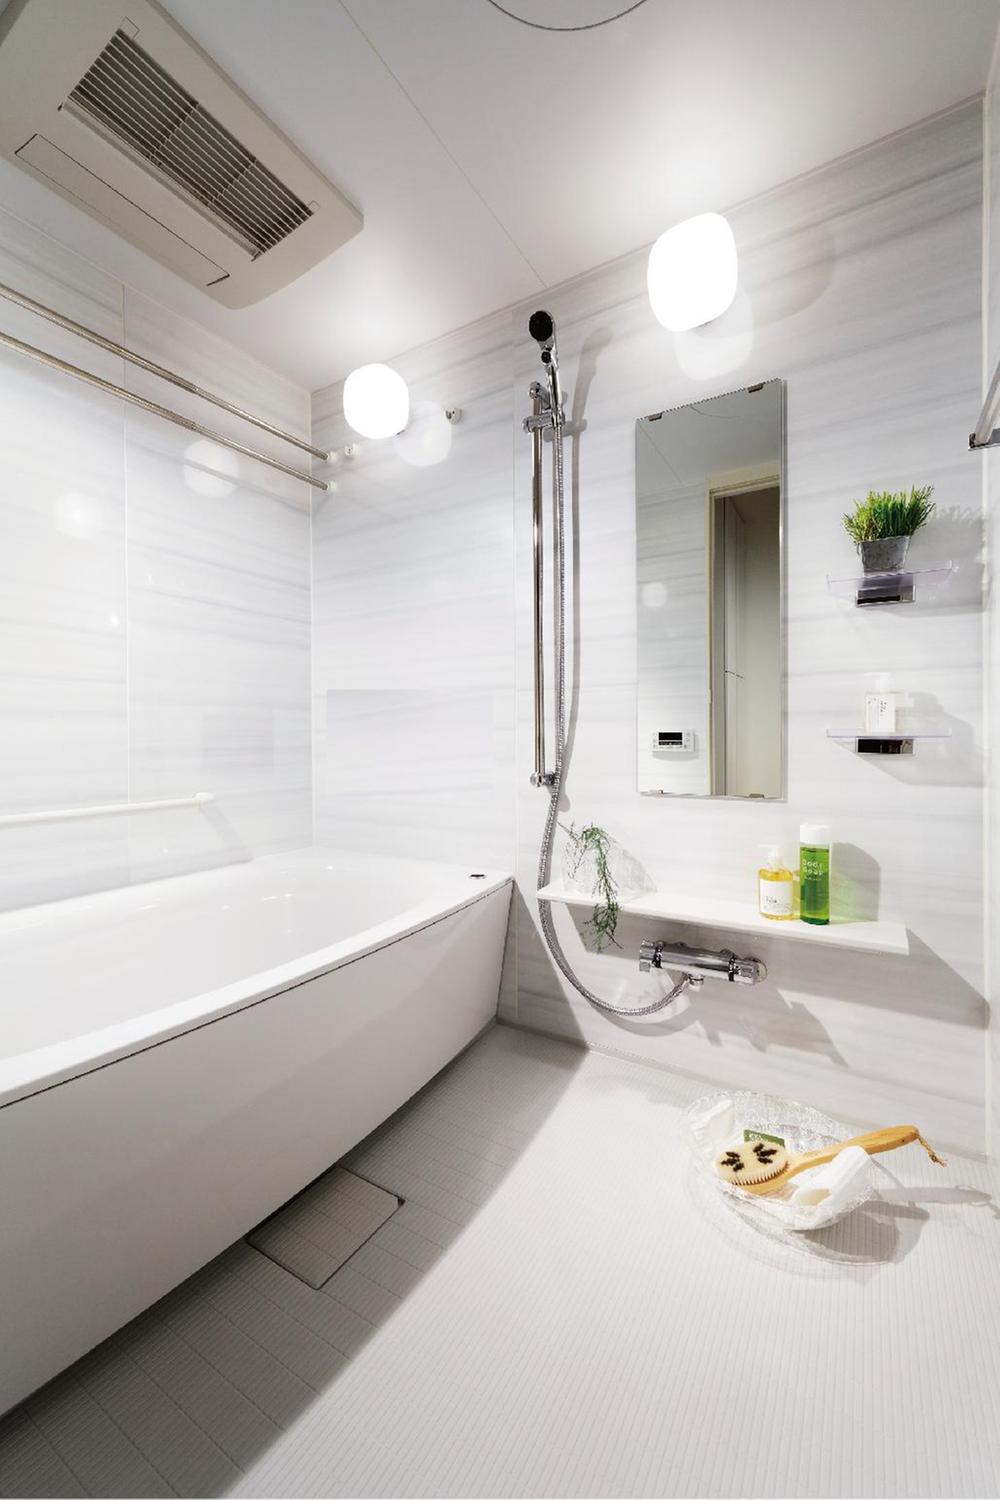 Bathroom. With ventilation drying heater ・ Tub Samobasu adopted